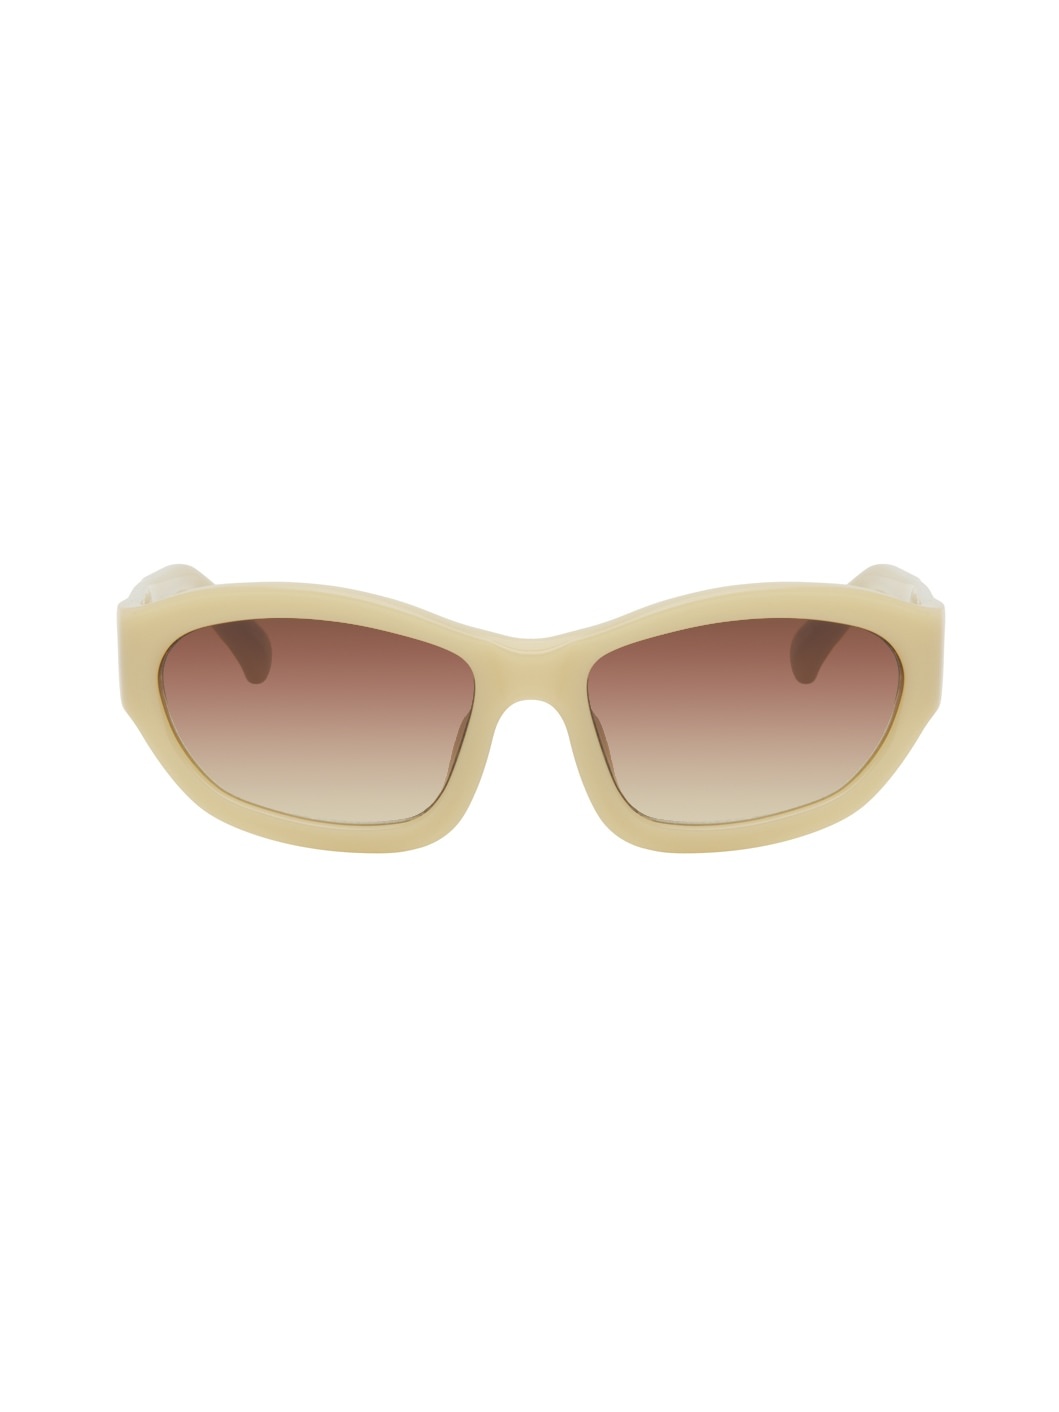 Beige Linda Farrow Edition Goggle Sunglasses - 1